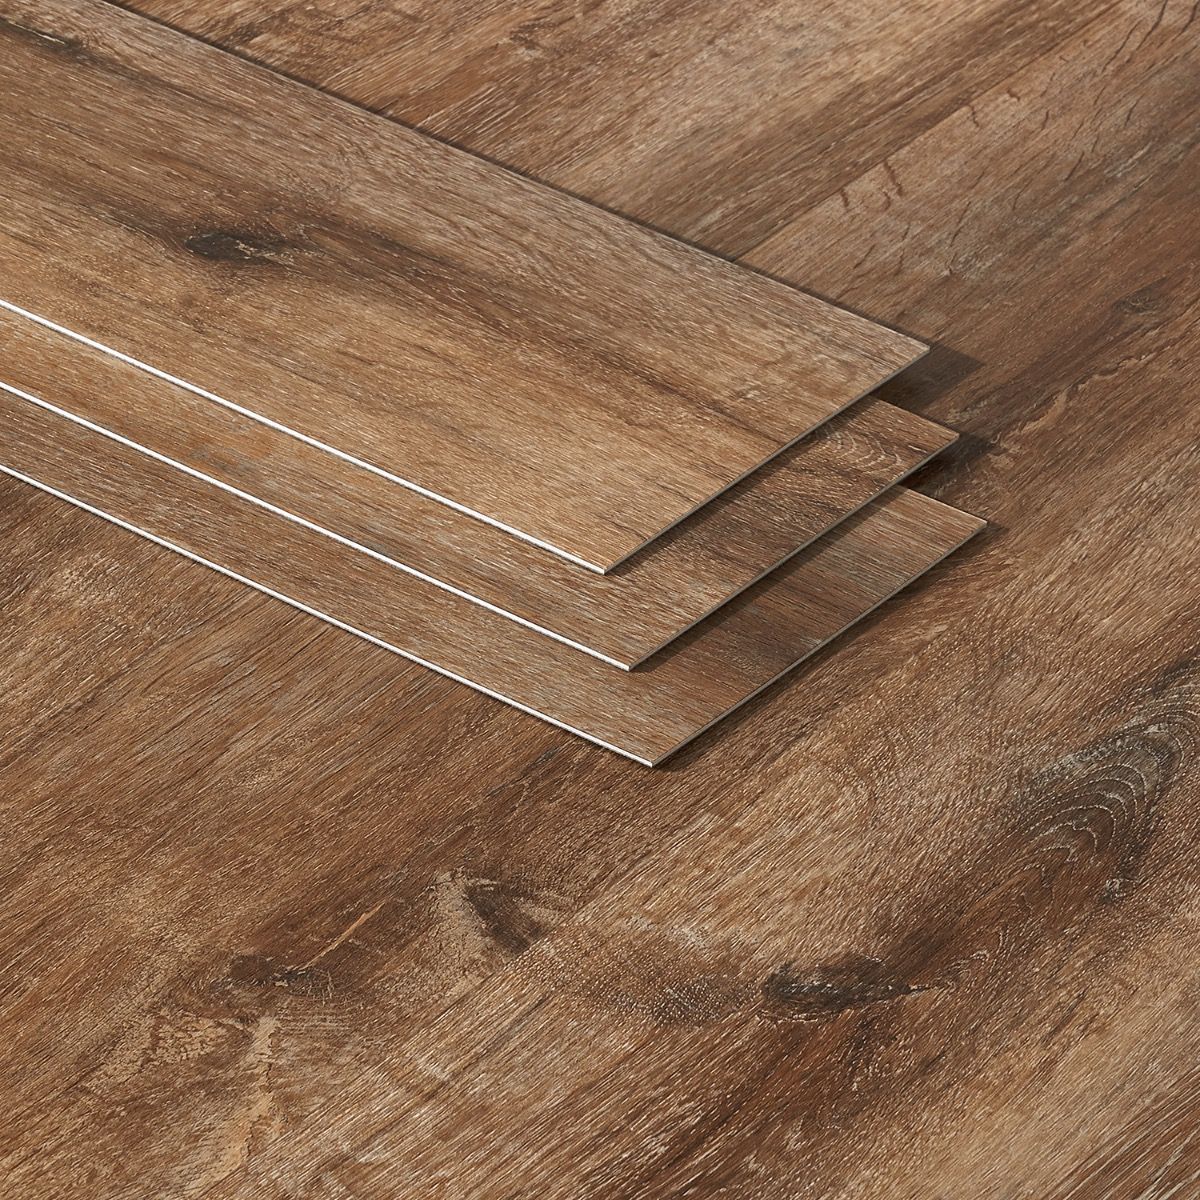 Artmore Tile Loseta Wood Look Cantal, Wood Look Luxury Vinyl Plank Flooring